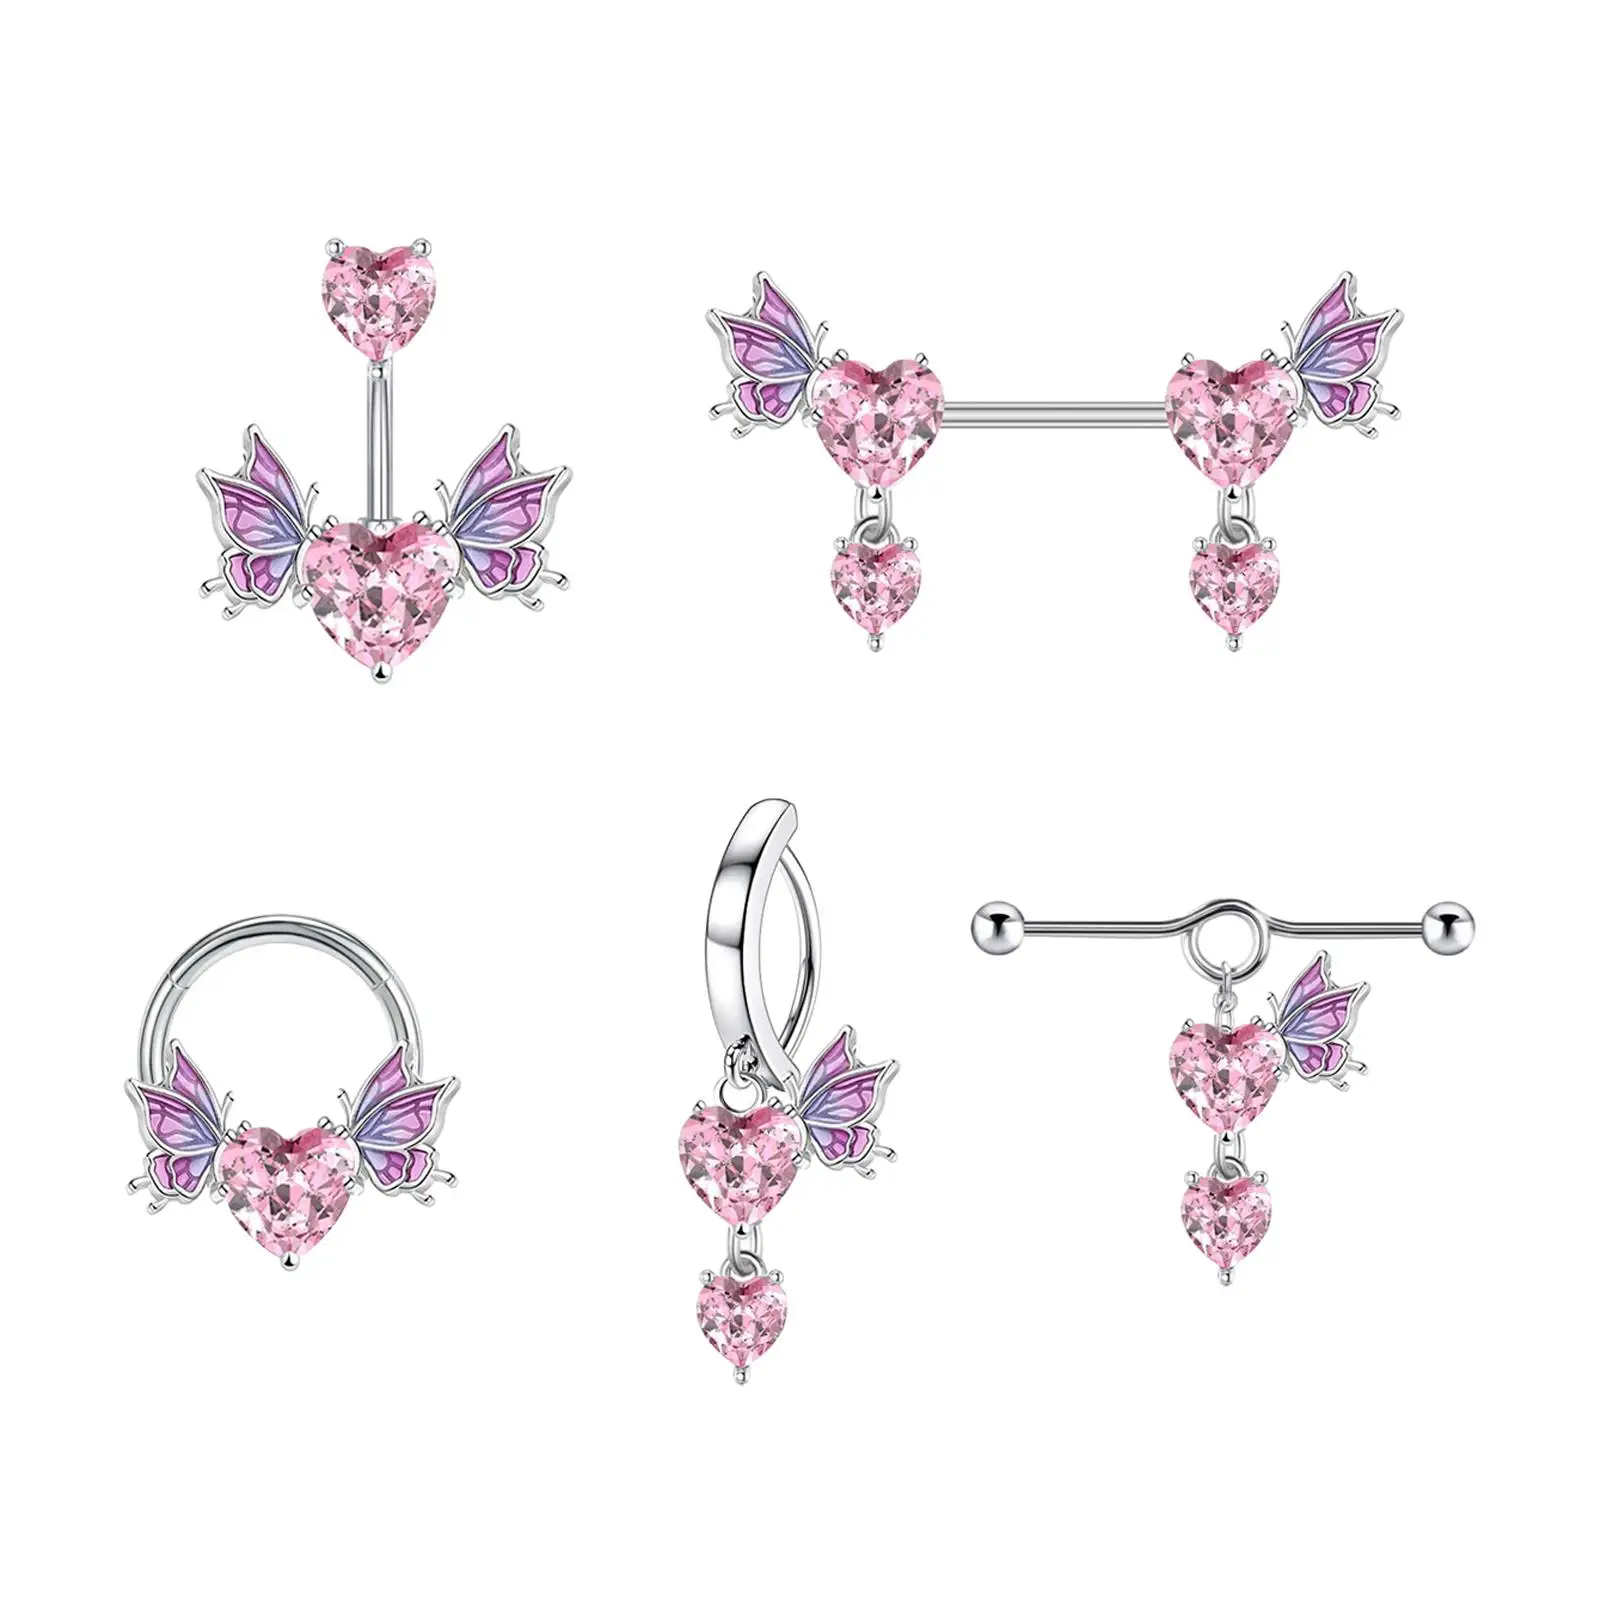 Piercing Jewelry Statement Stylish Punk Body Jewelry Jewelry Accessories for Halloween Valentine`s Day Christmas Birthday Gift